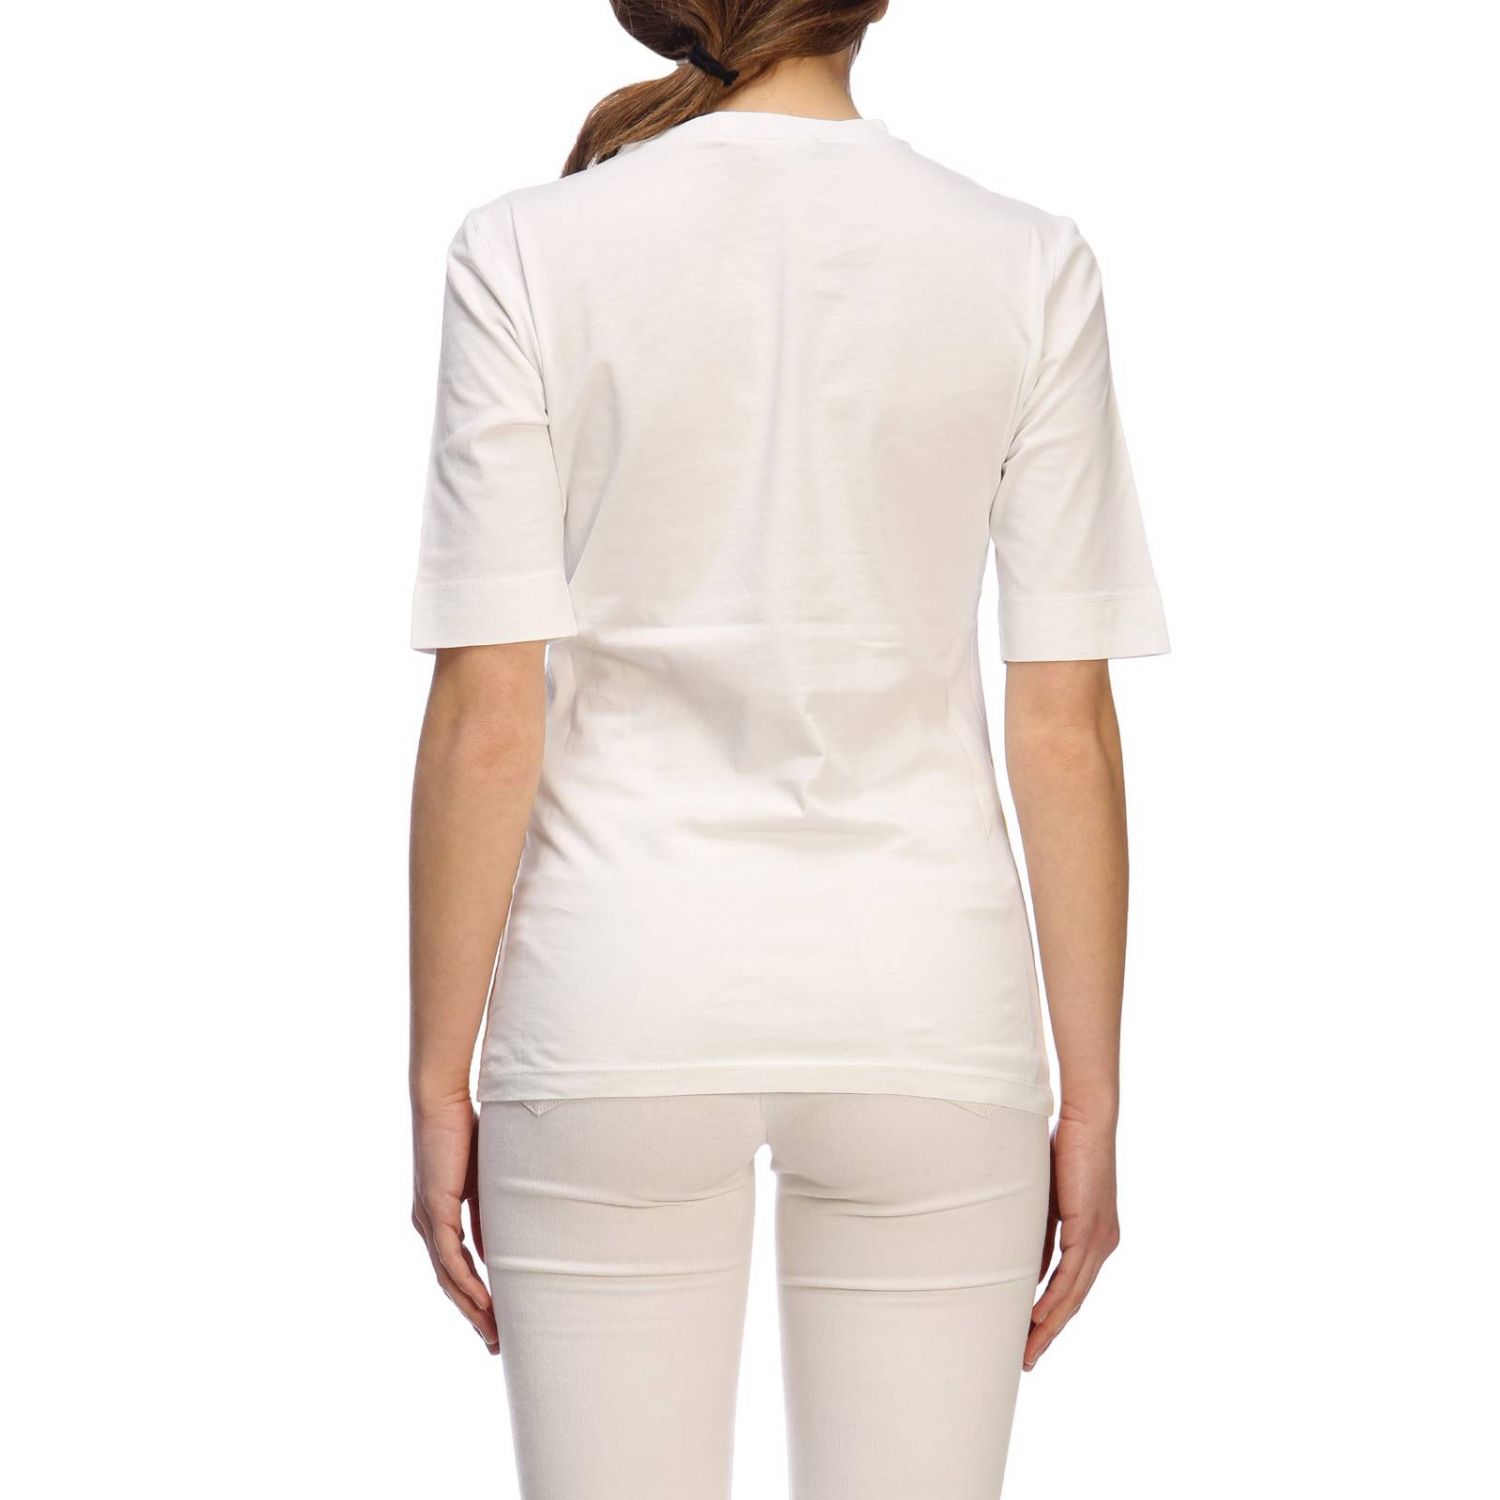 Love Moschino Outlet: T-shirt women Moschino Love - White | T-Shirt ...